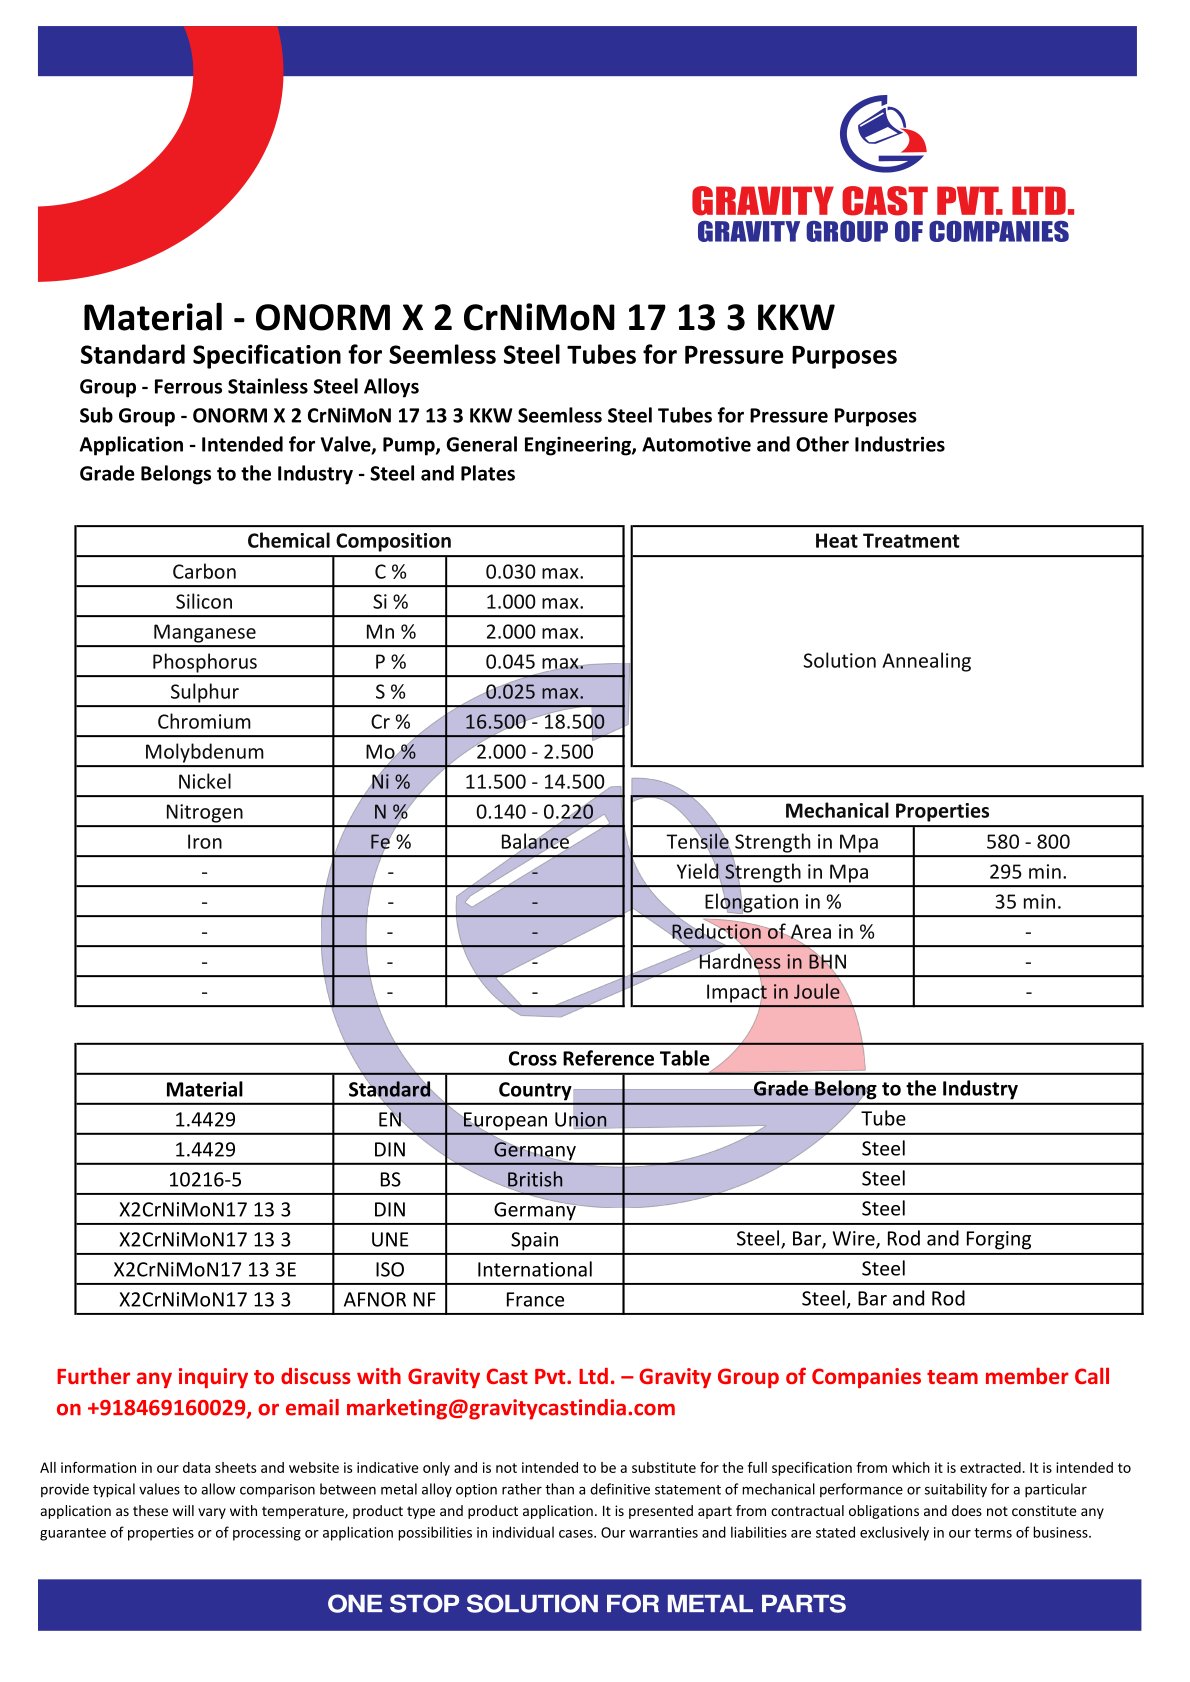 ONORM X 2 CrNiMoN 17 13 3 KKW.pdf